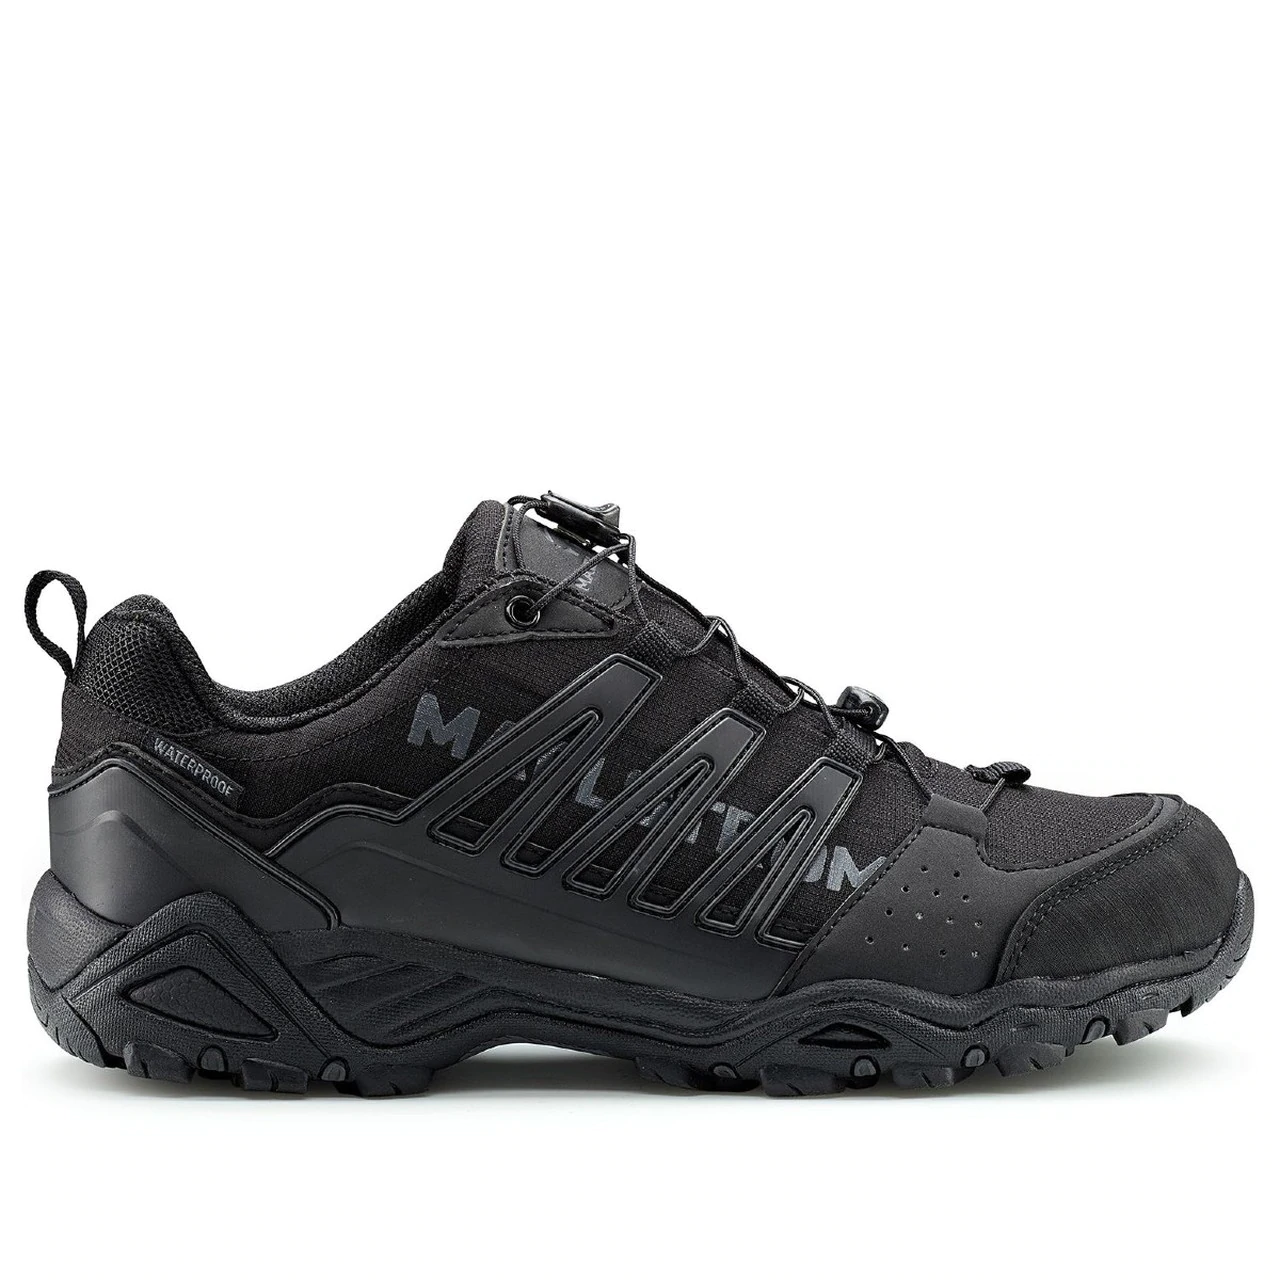 Maelstrom Men's Speed Waterproof Low Hiking Boots Black - $19.98 (Free ...